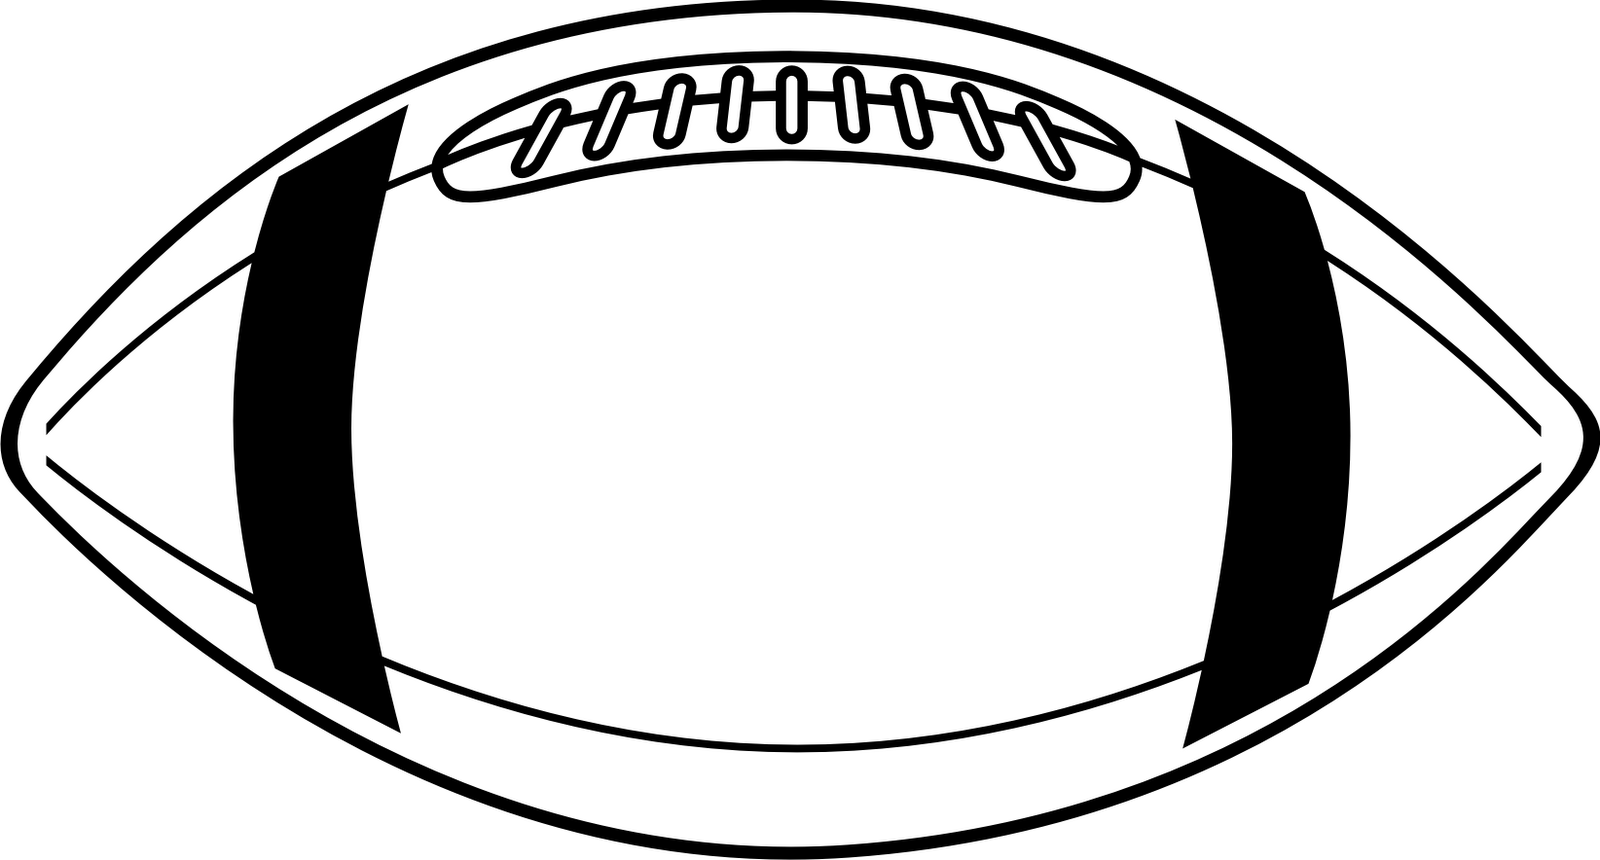 Printable NFL Football Team Logos